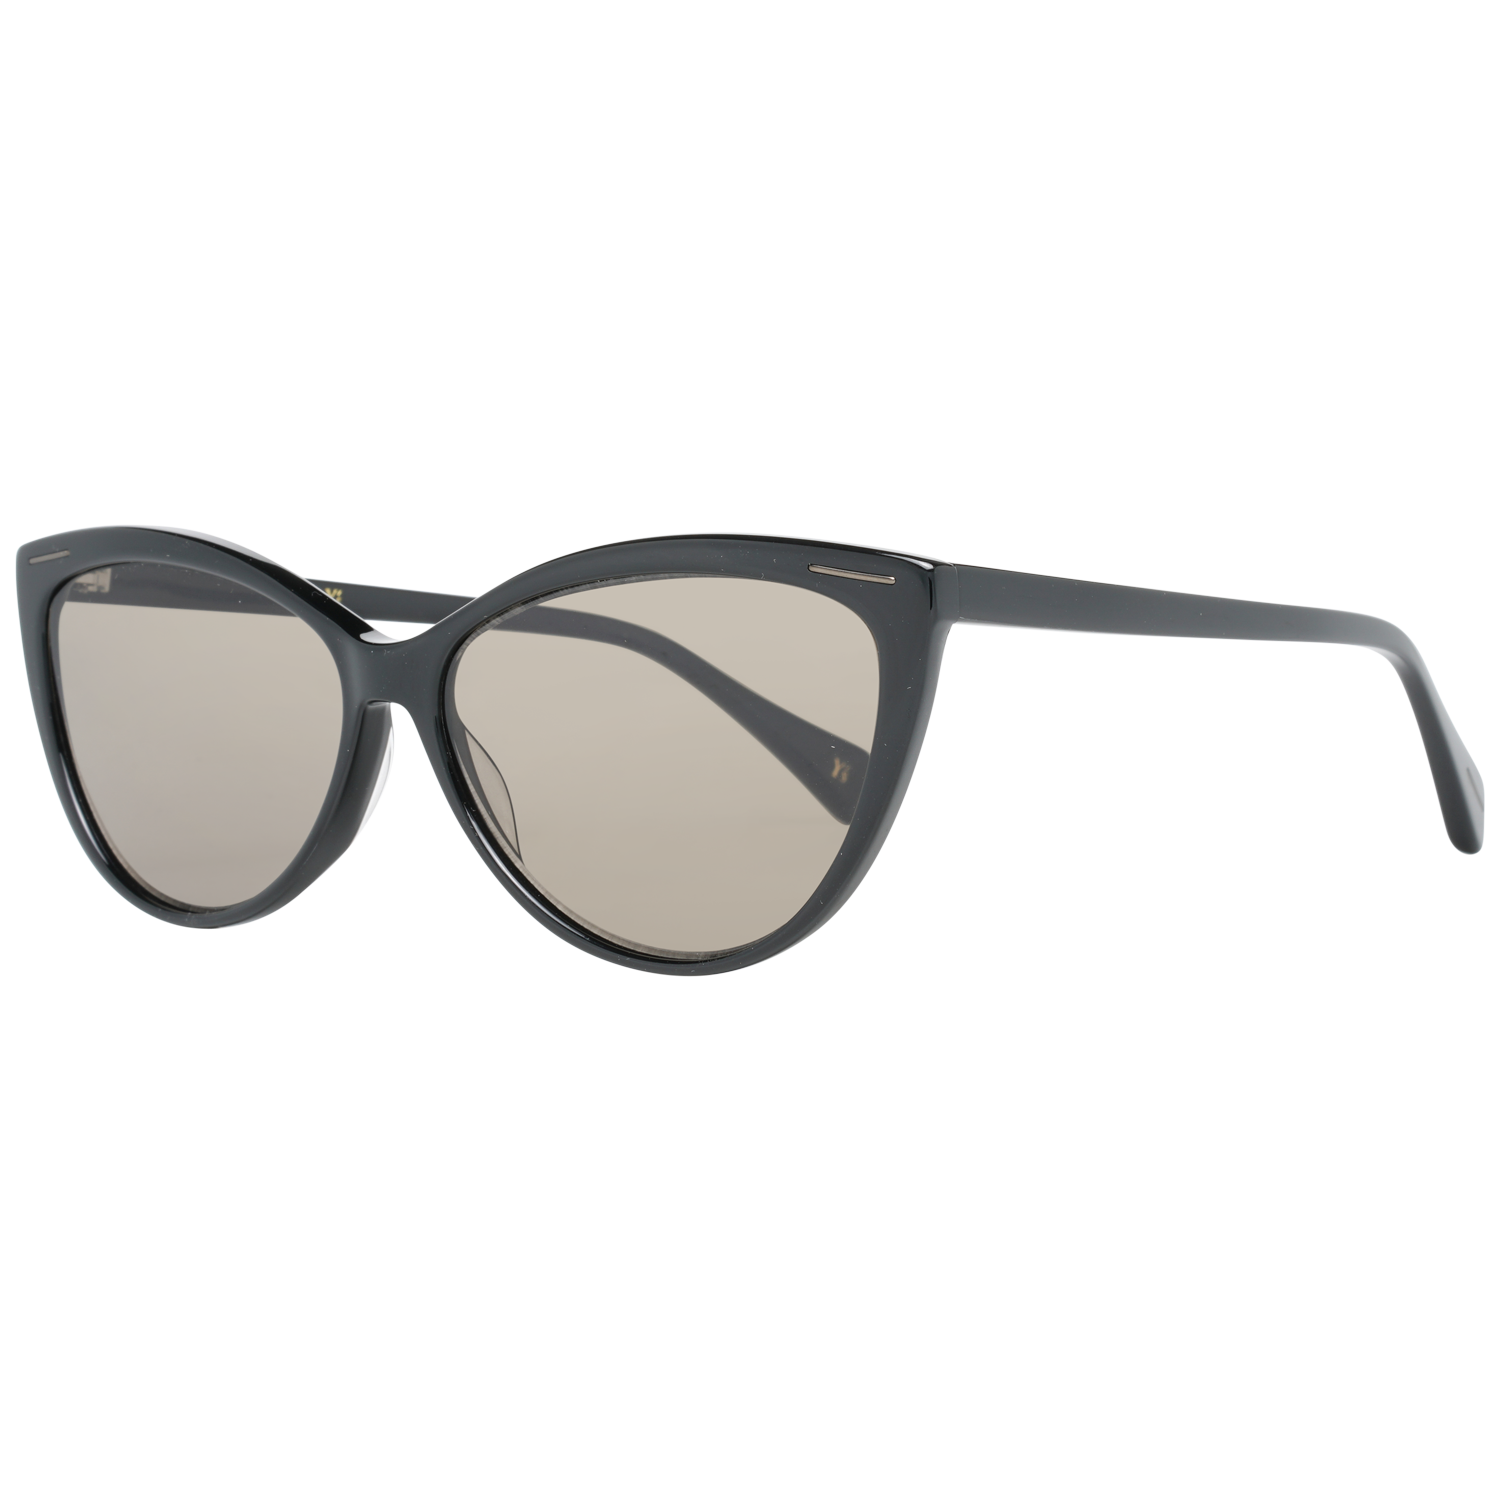 Yohji Yamamoto Sunglasses YS5001 001 58 Black